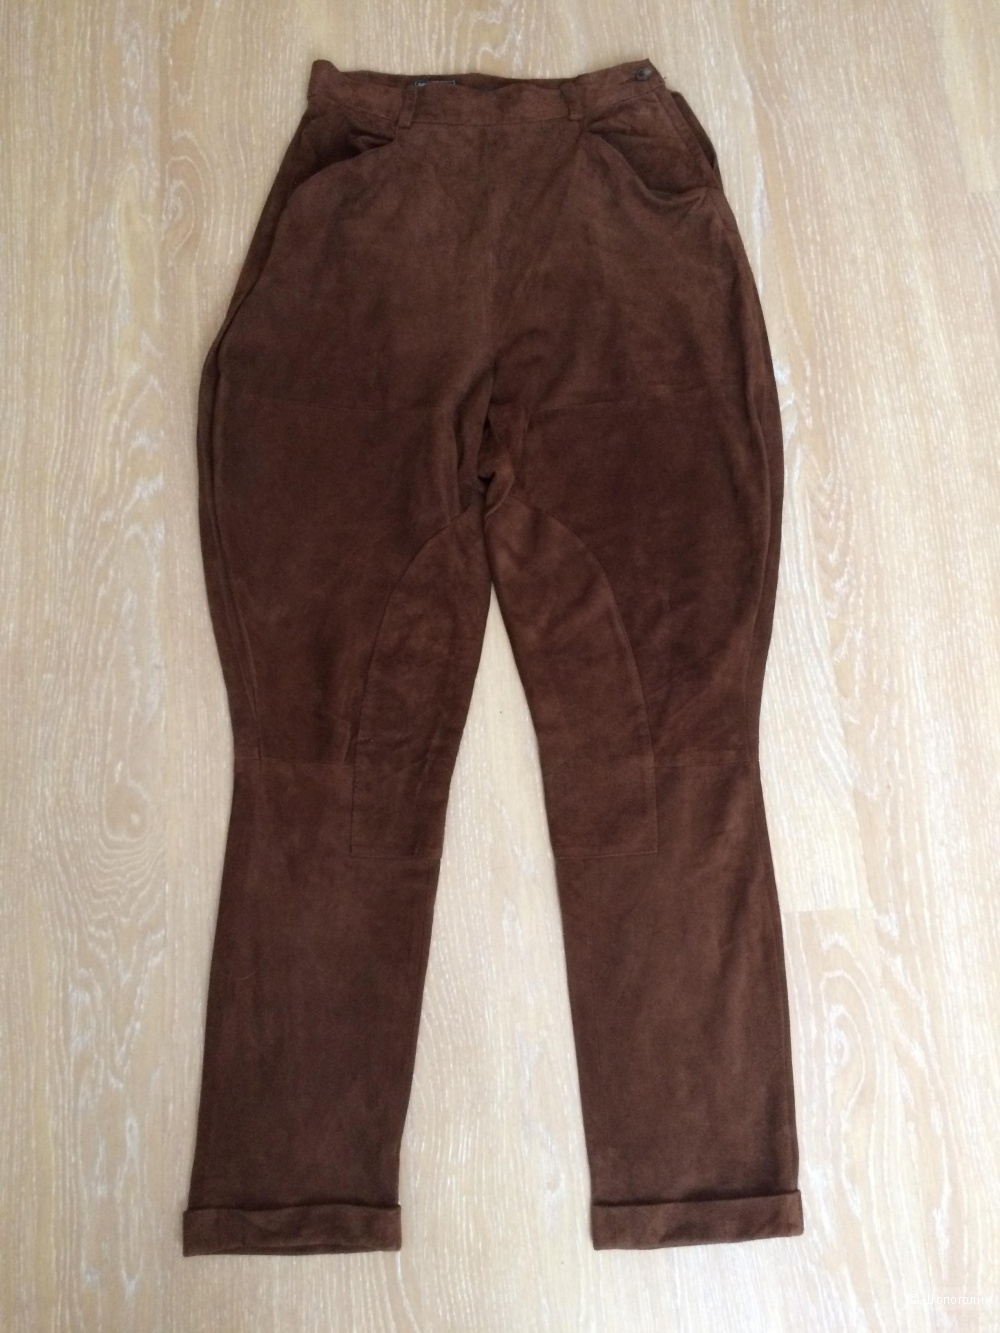 Замшевые брюки Ralph Lauren, р-р 42-44